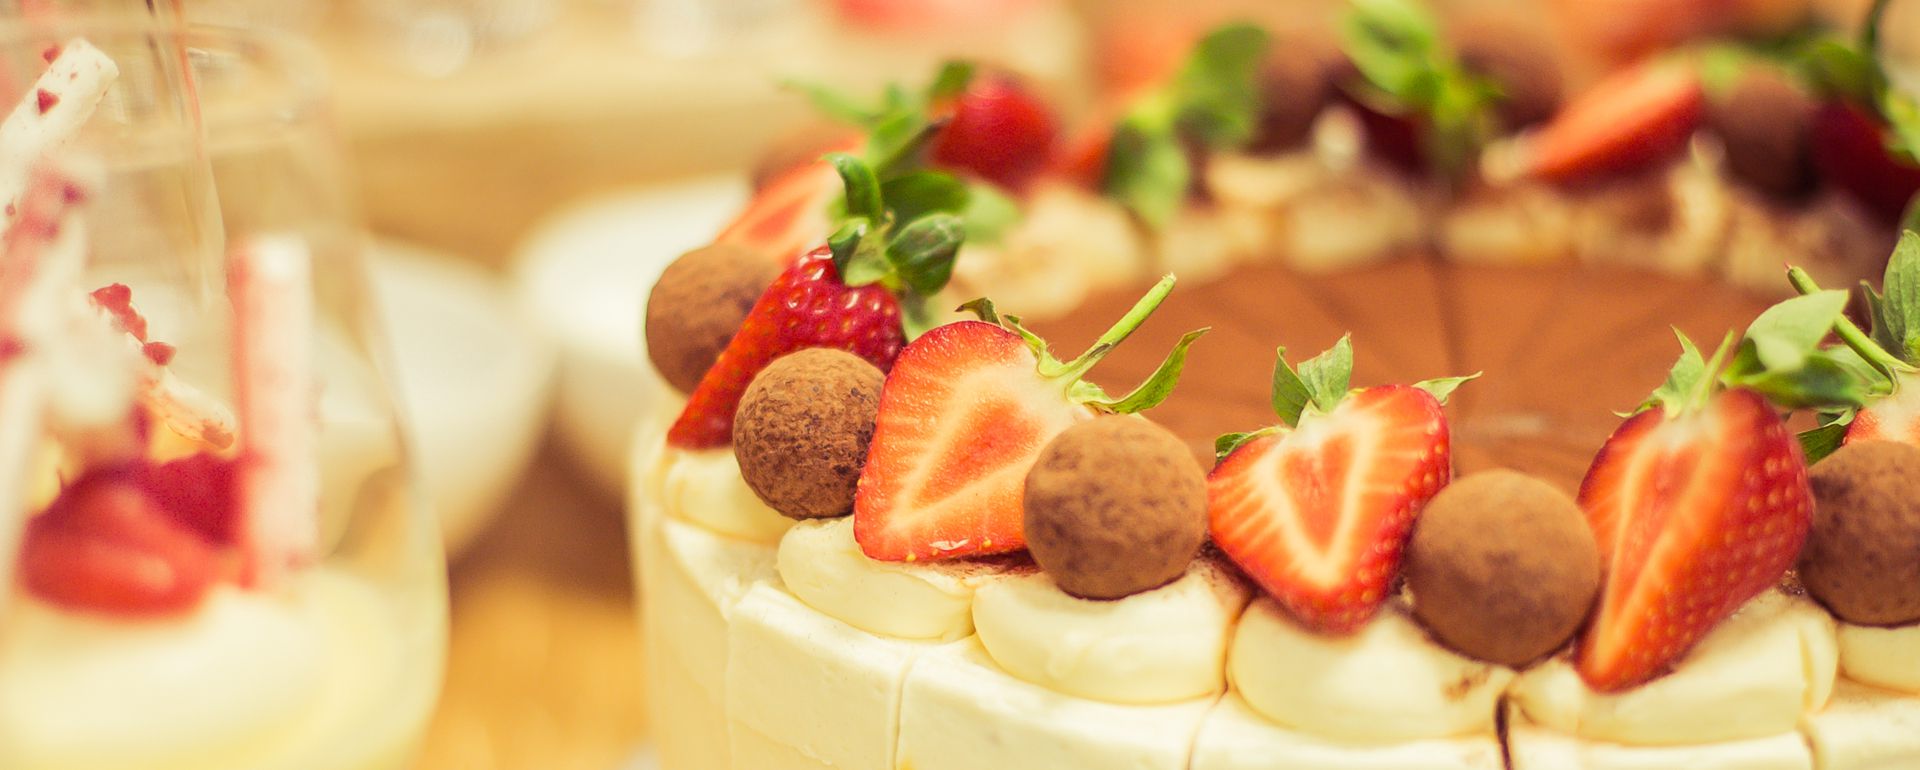 Strawberry and chocolate cake